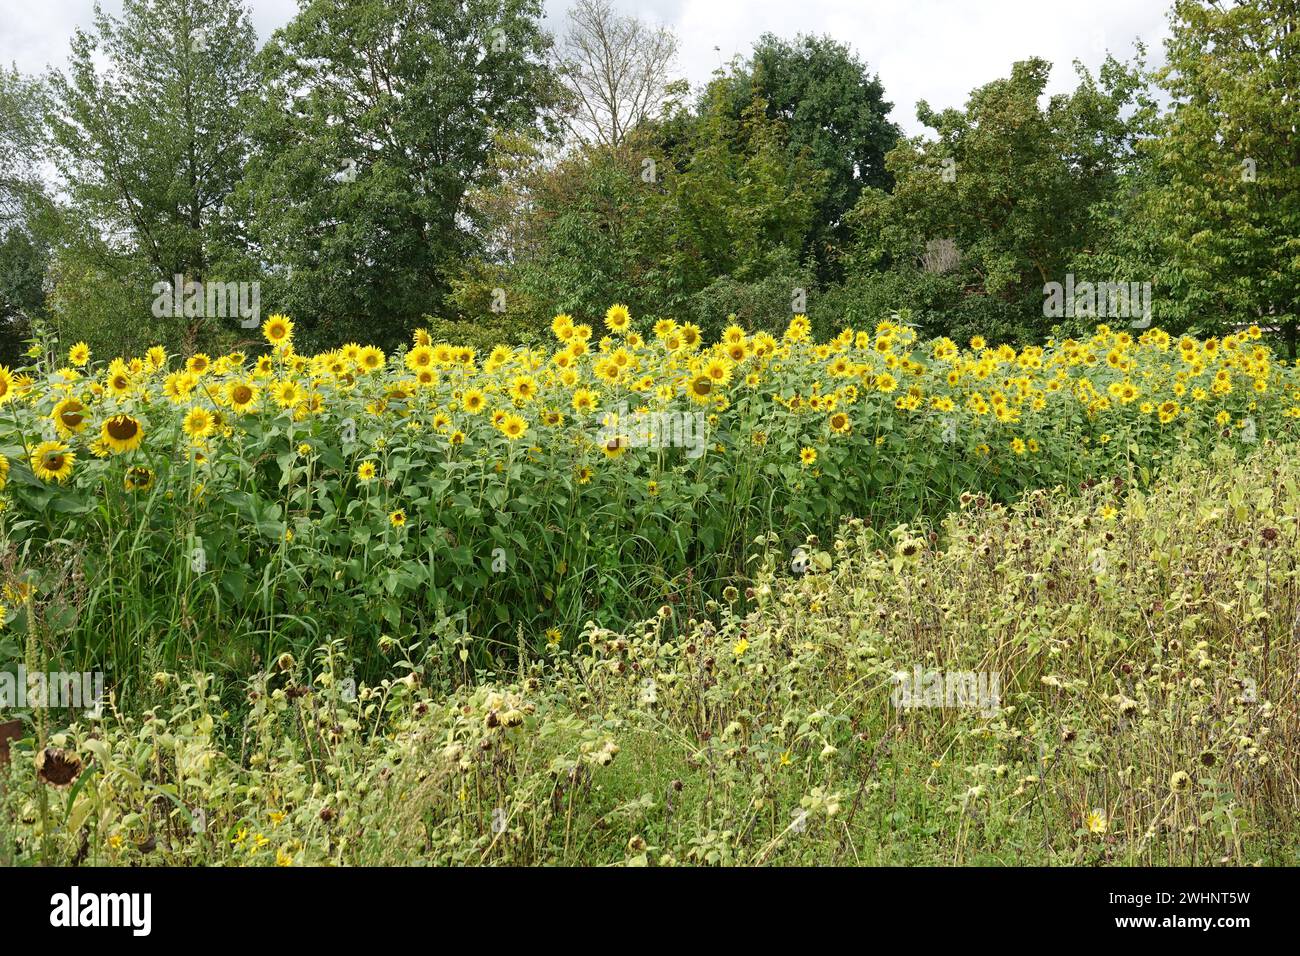 Helianthus annuus, sunflower Stock Photo